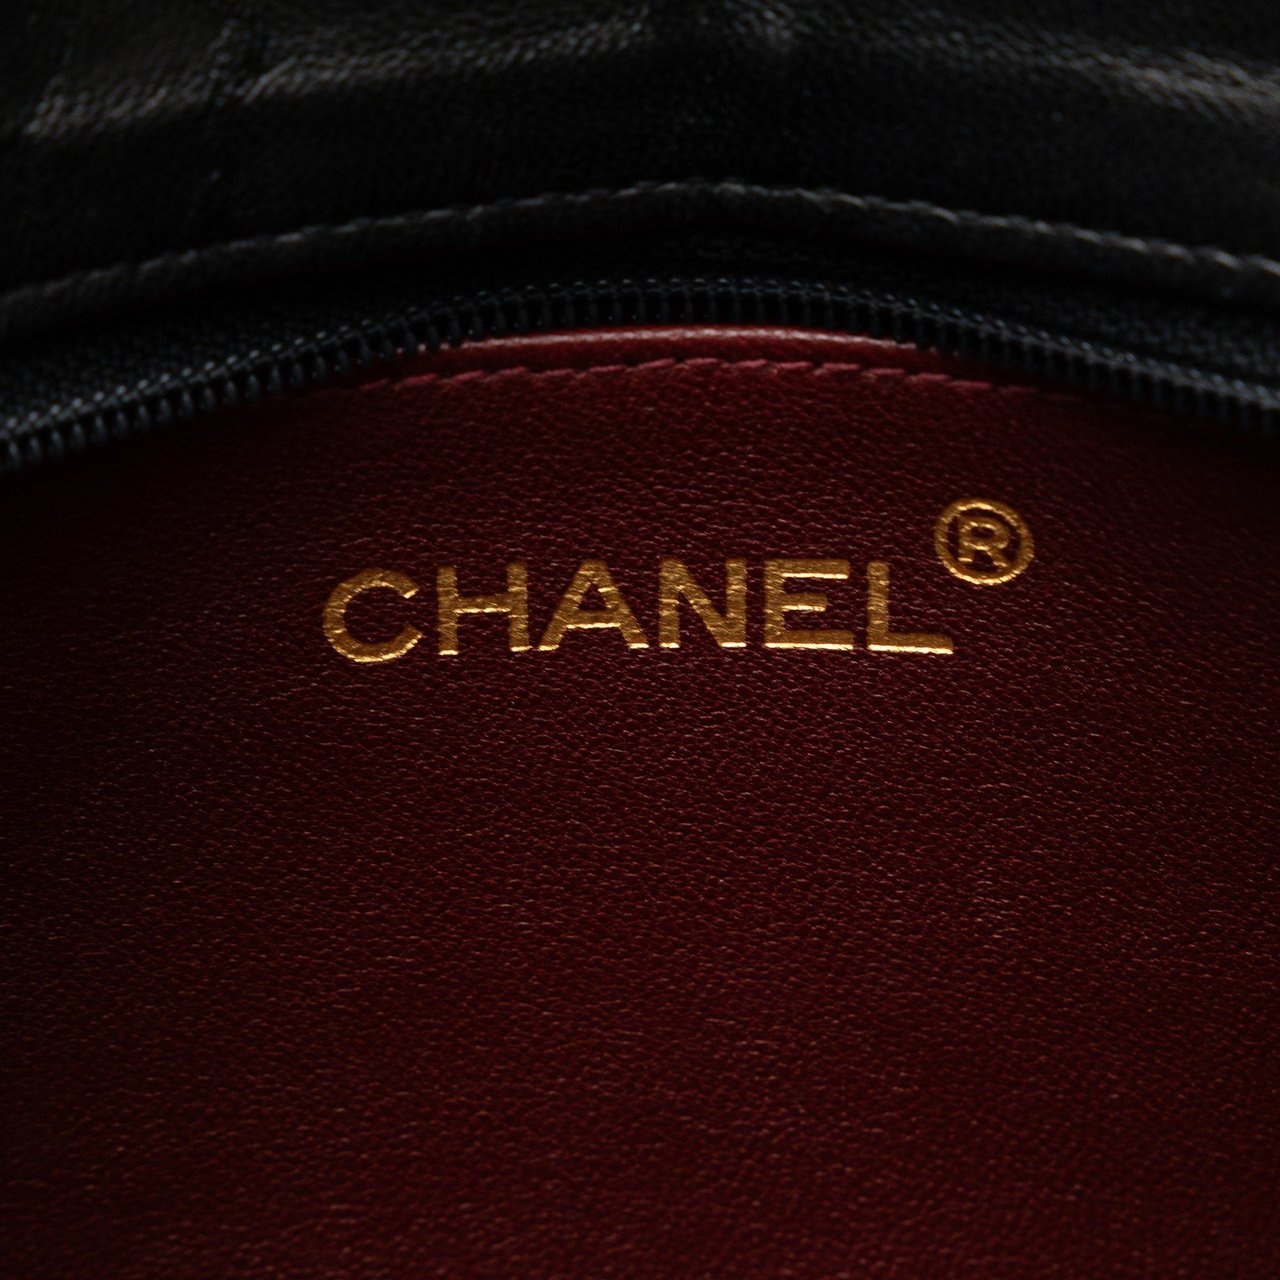 Chanel Quilted Lambskin Chain Shoulder Bag Zwart